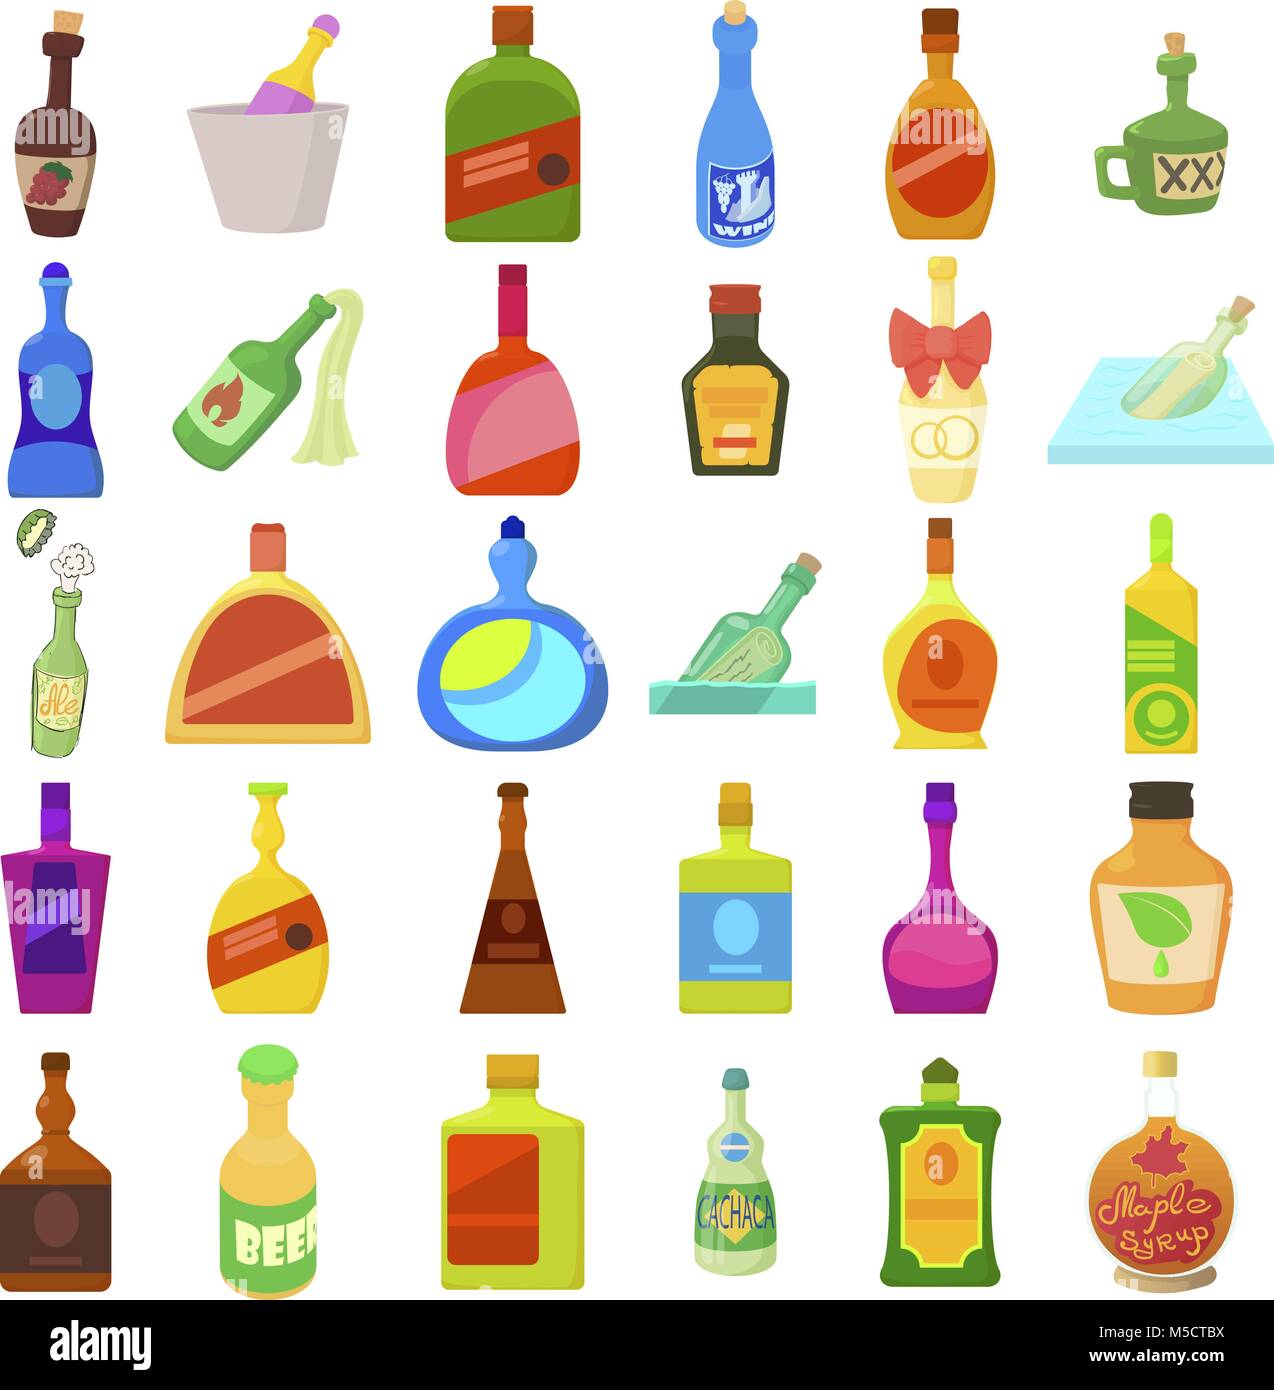 Alcohol bottle icon set, cartoon style Stock Vector